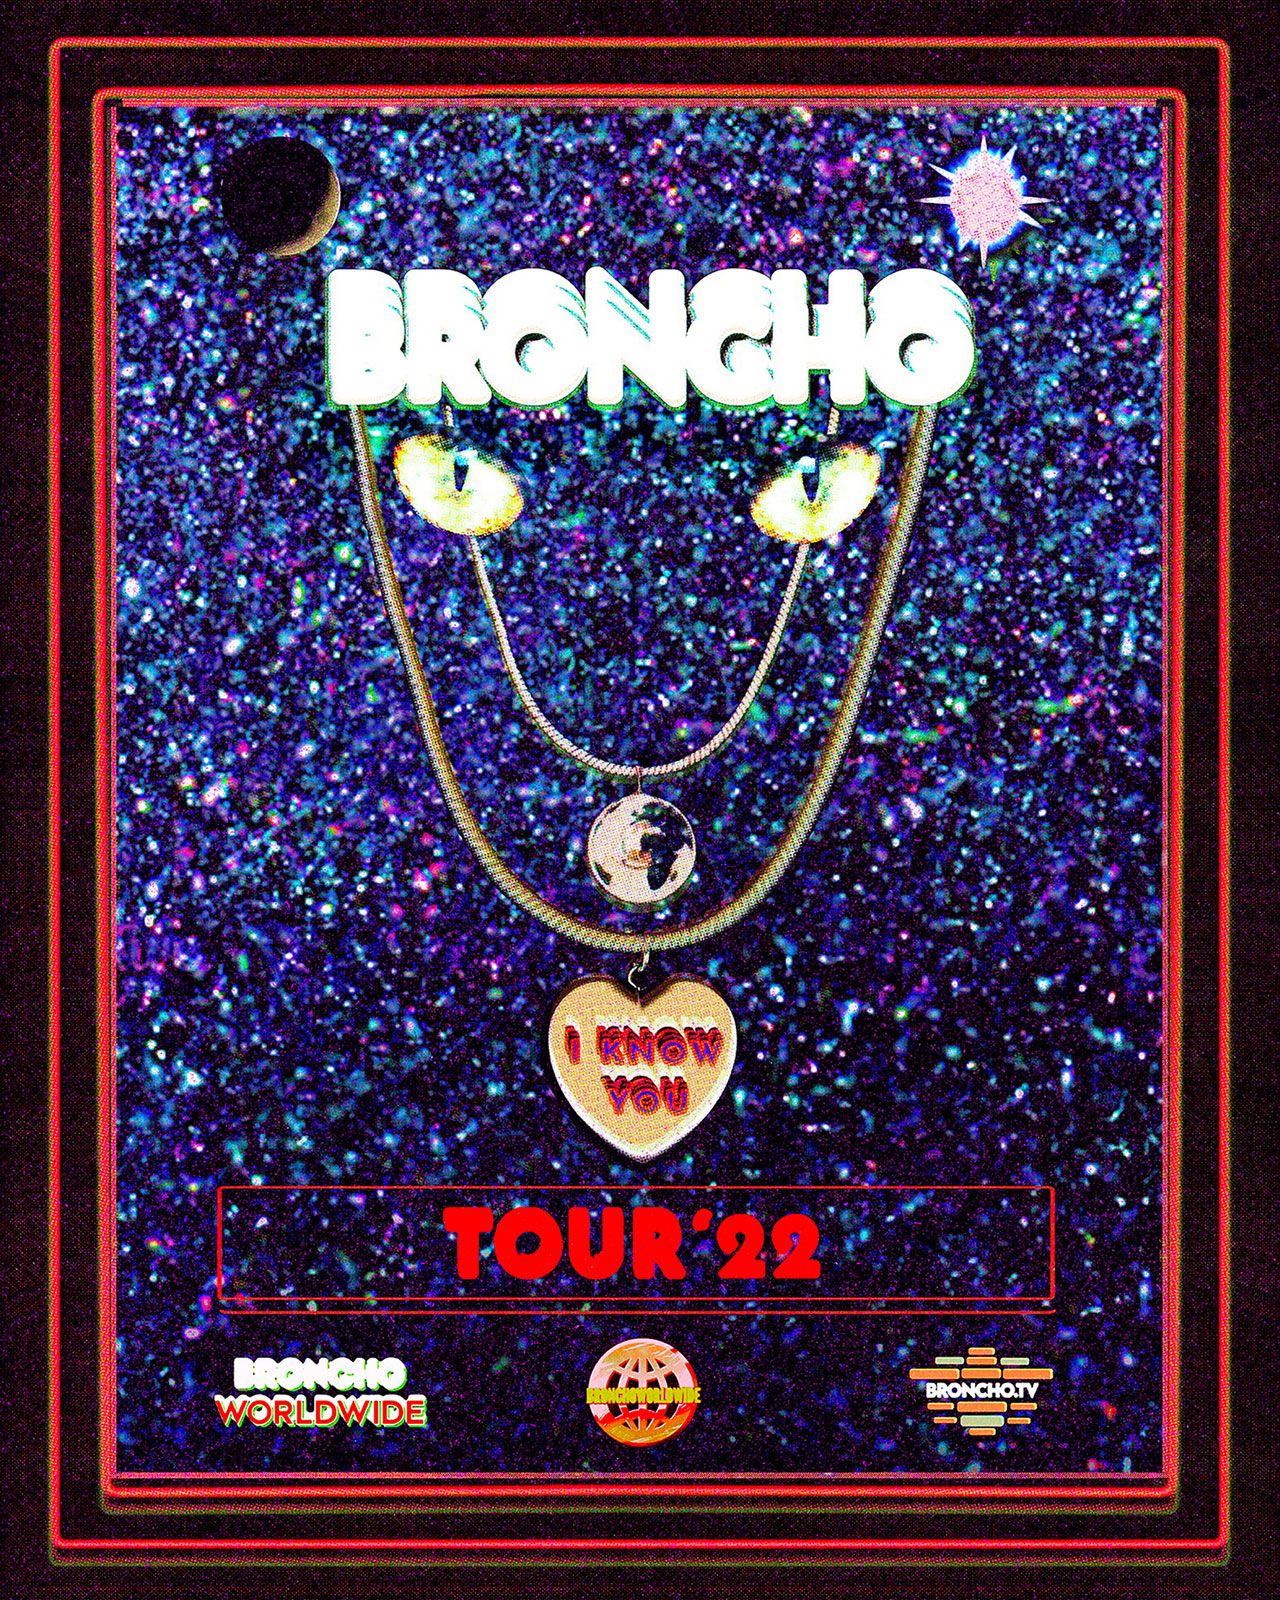 Broncho Band Tour Poster 2022